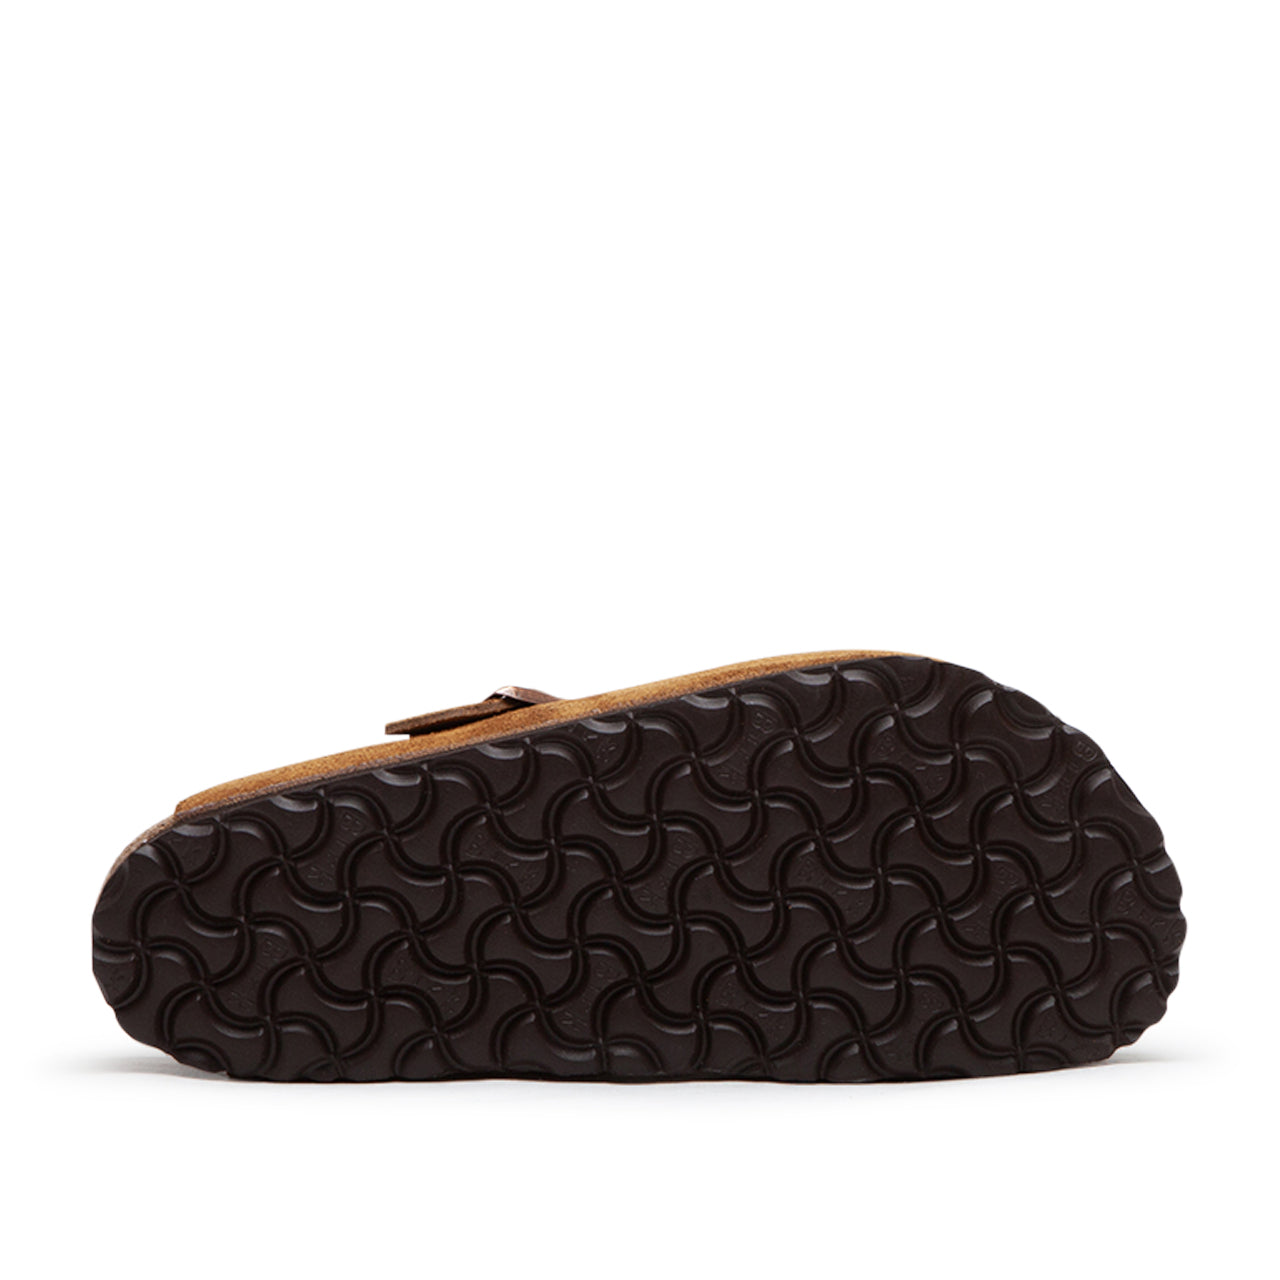 Birkenstock Boston Soft Footbed Suede Leather (Braun)  - Allike Store